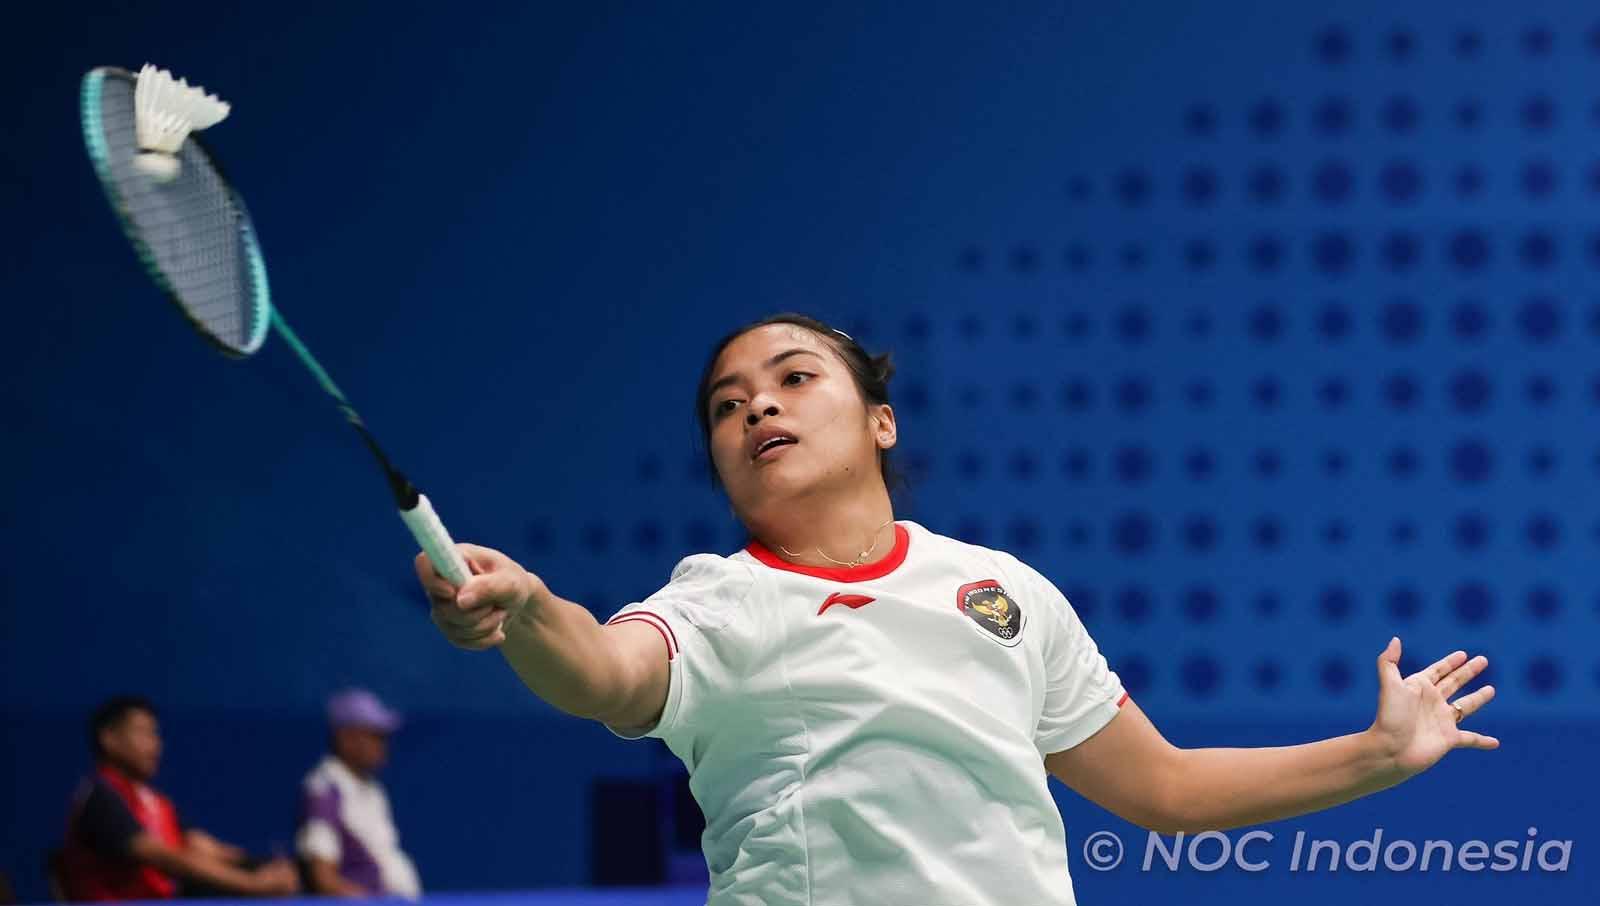 Rionny Mainaky Jadi Biang Kerok Kekalahan Gregoria Mariska di Asian Games